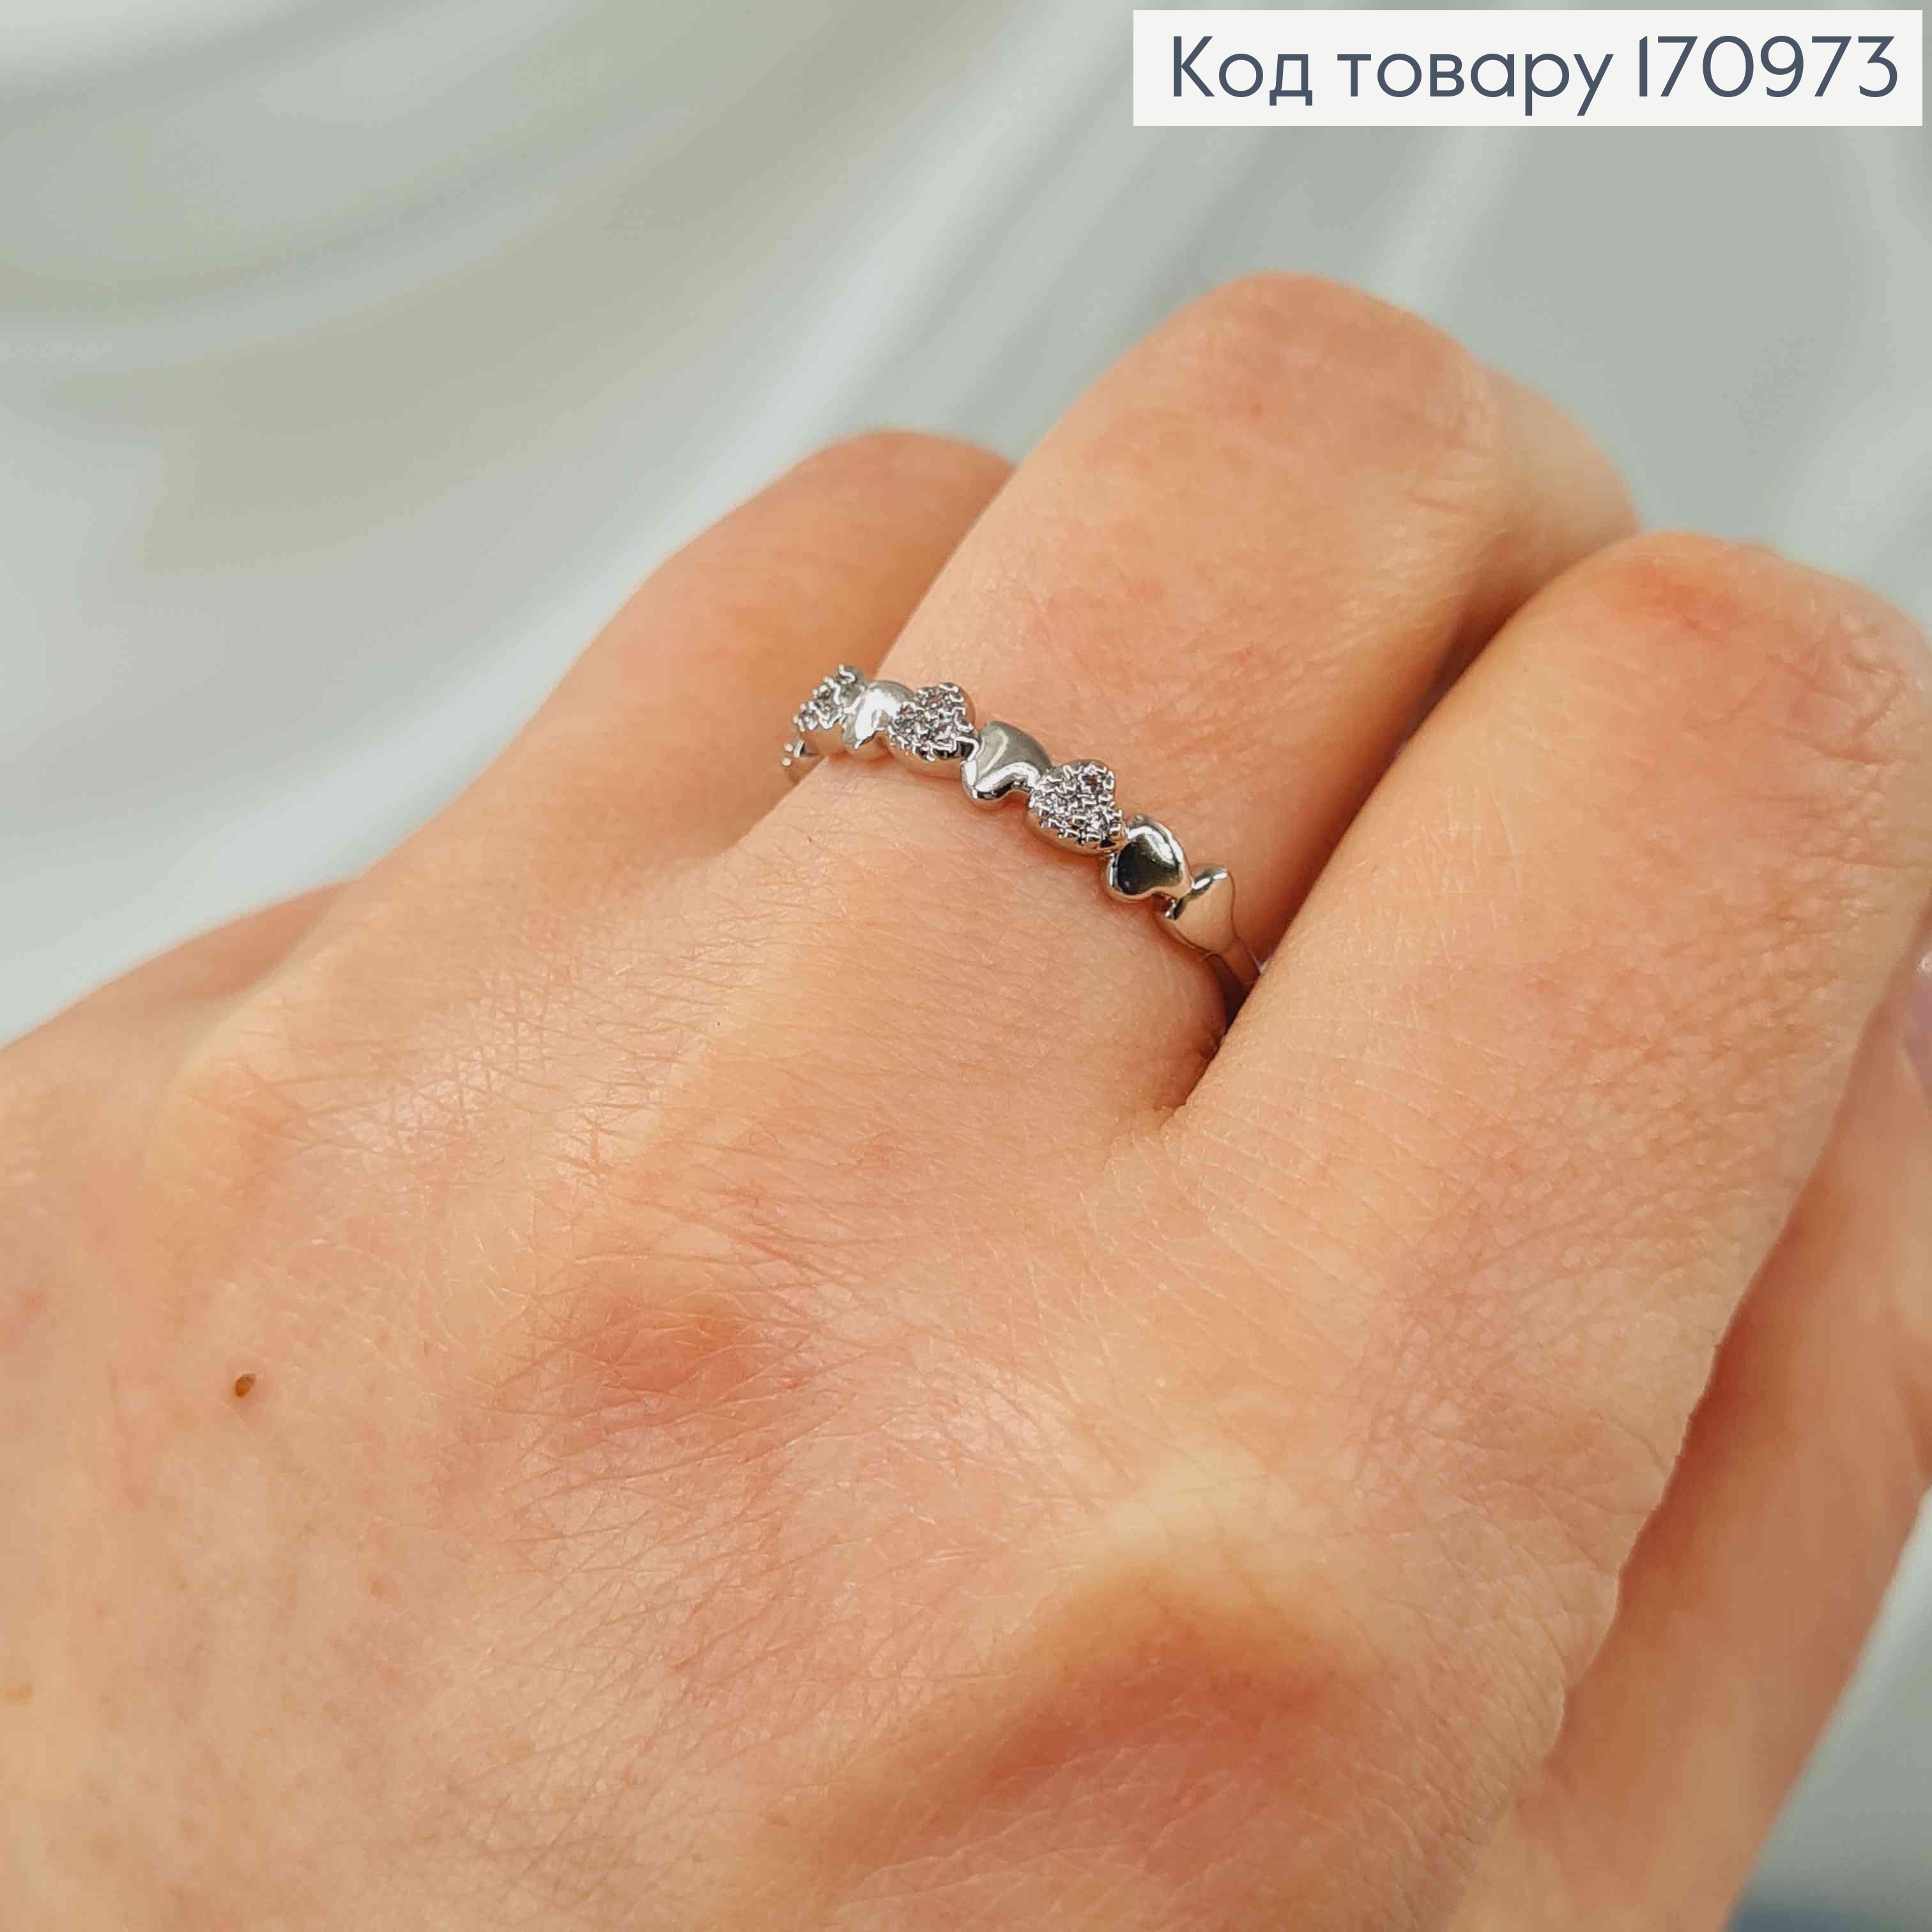 Кольцо родованное, с сердечками и камнями, Xuping 18K 170973 фото 2